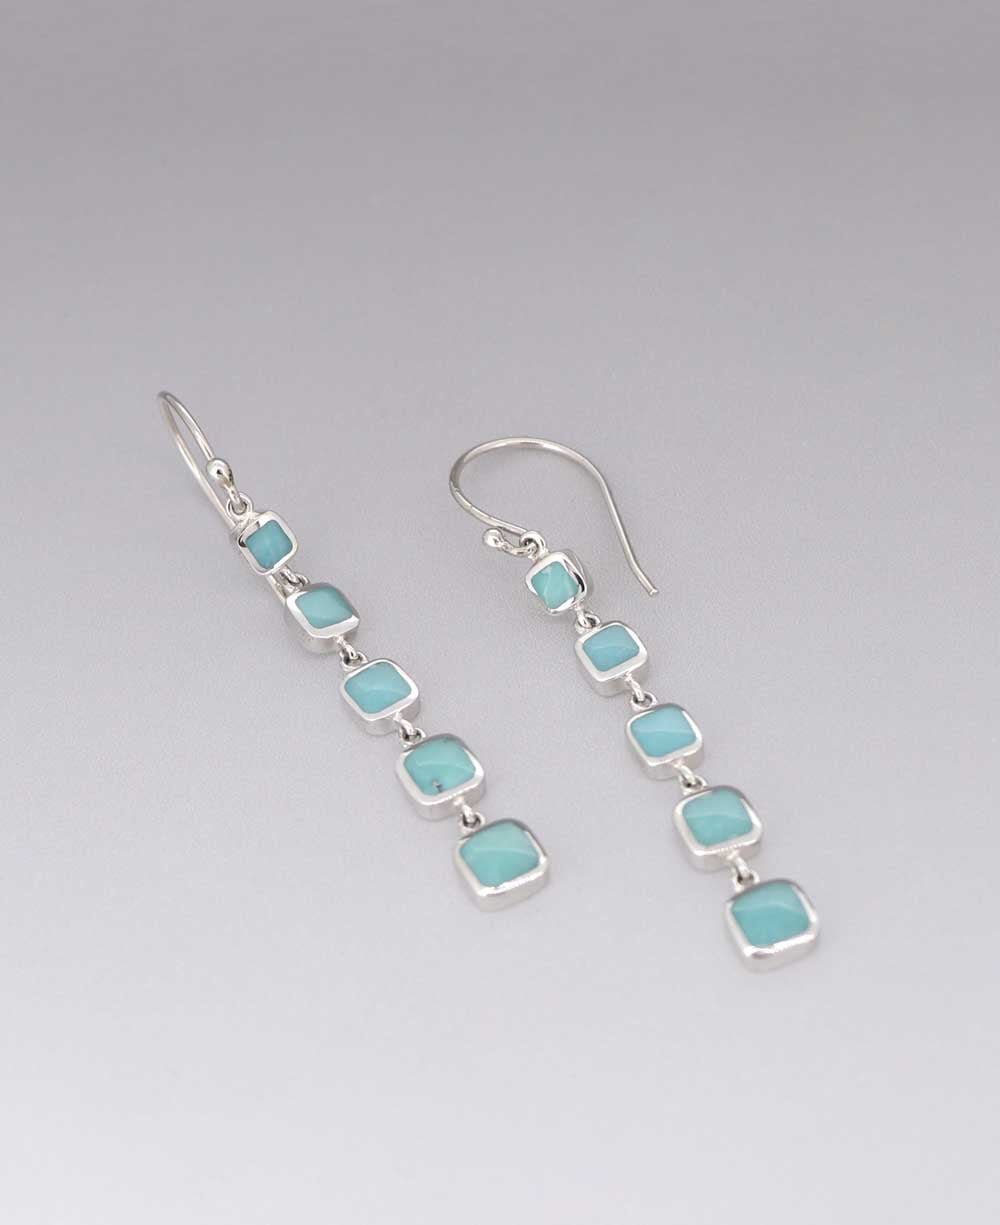 Quintuple Turquoise Square Sterling Silver Dangle Earrings - Earrings